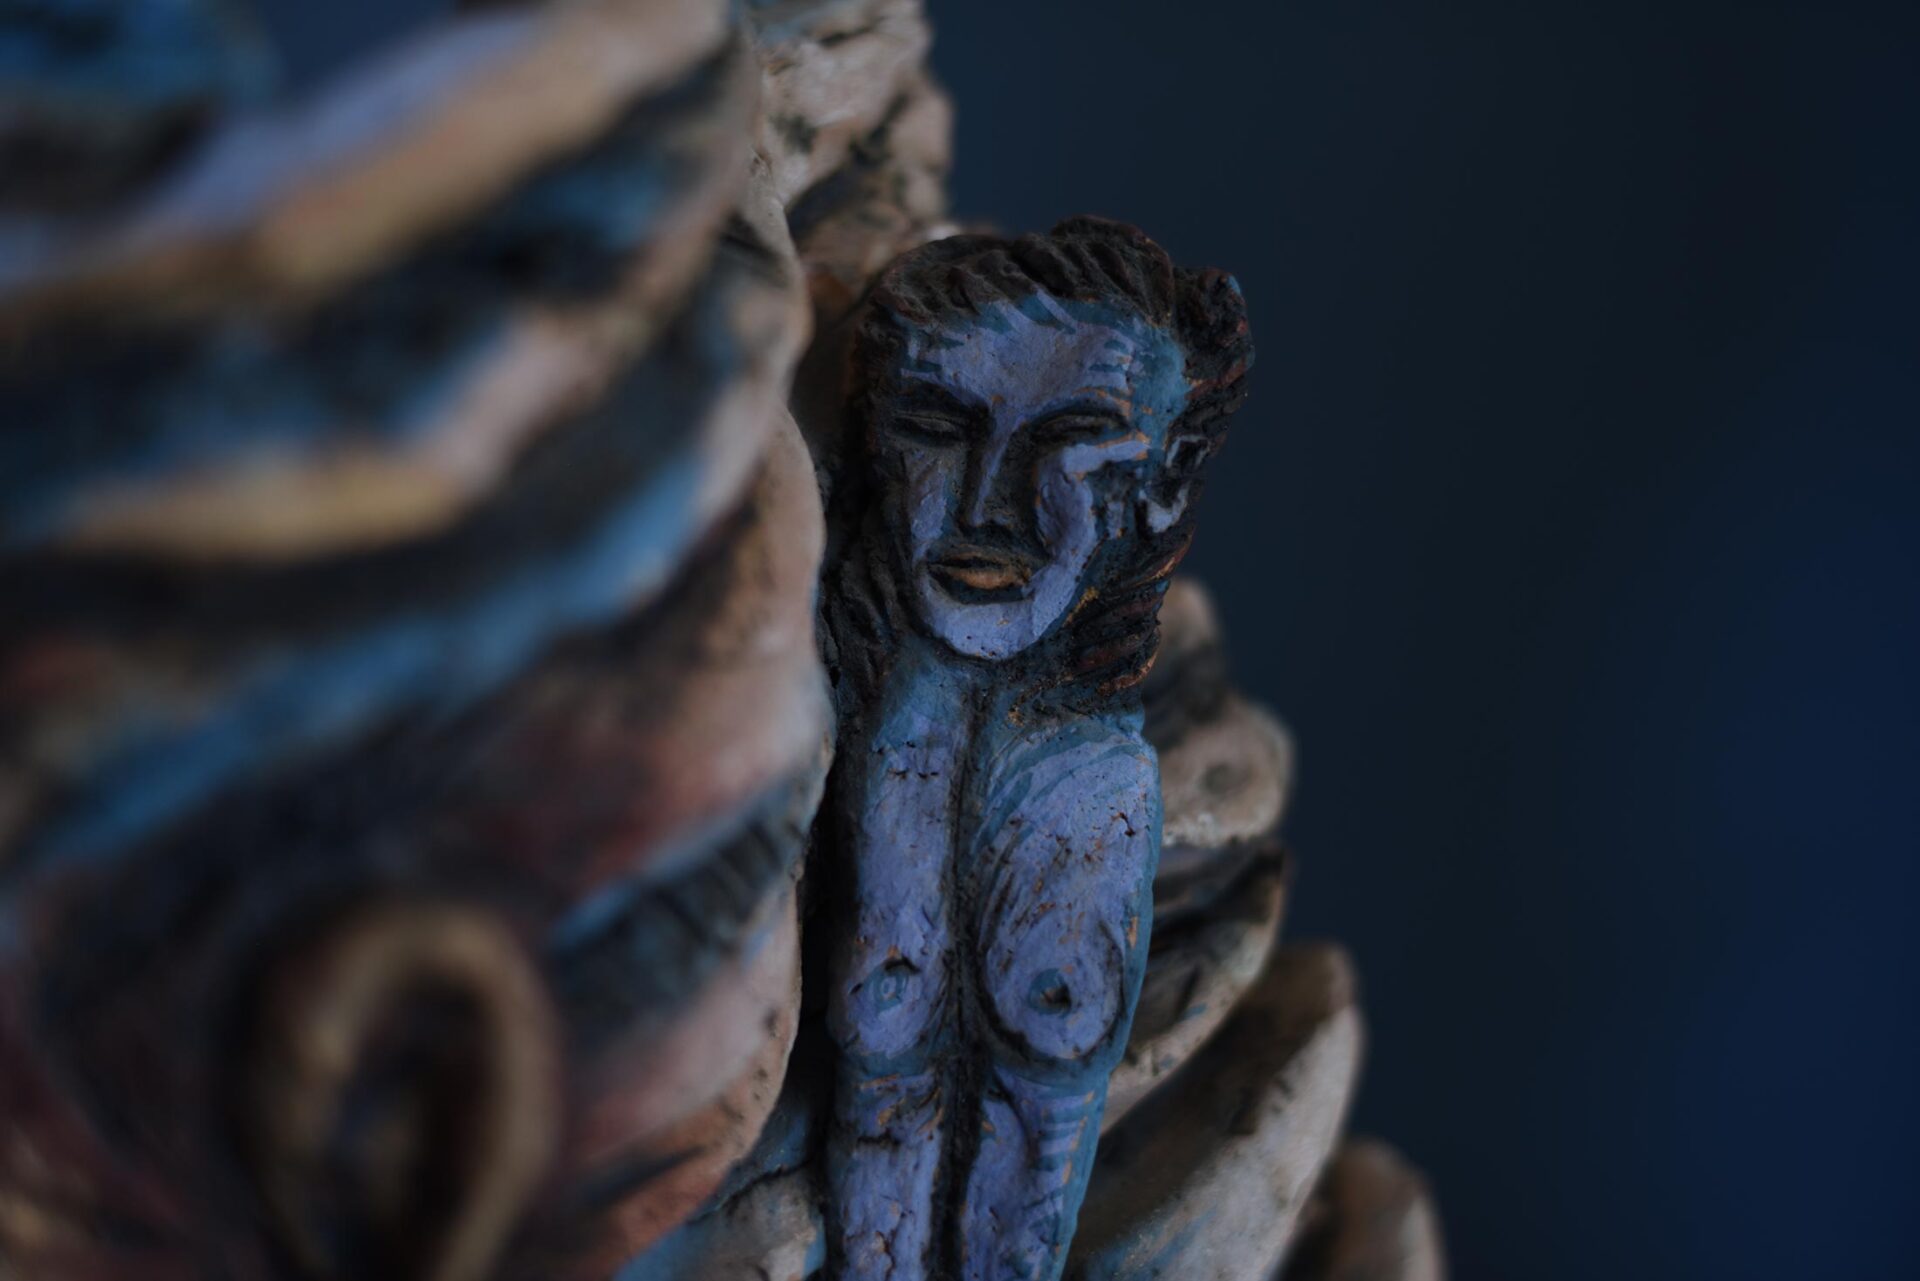 A sculpture of a small blue figure.